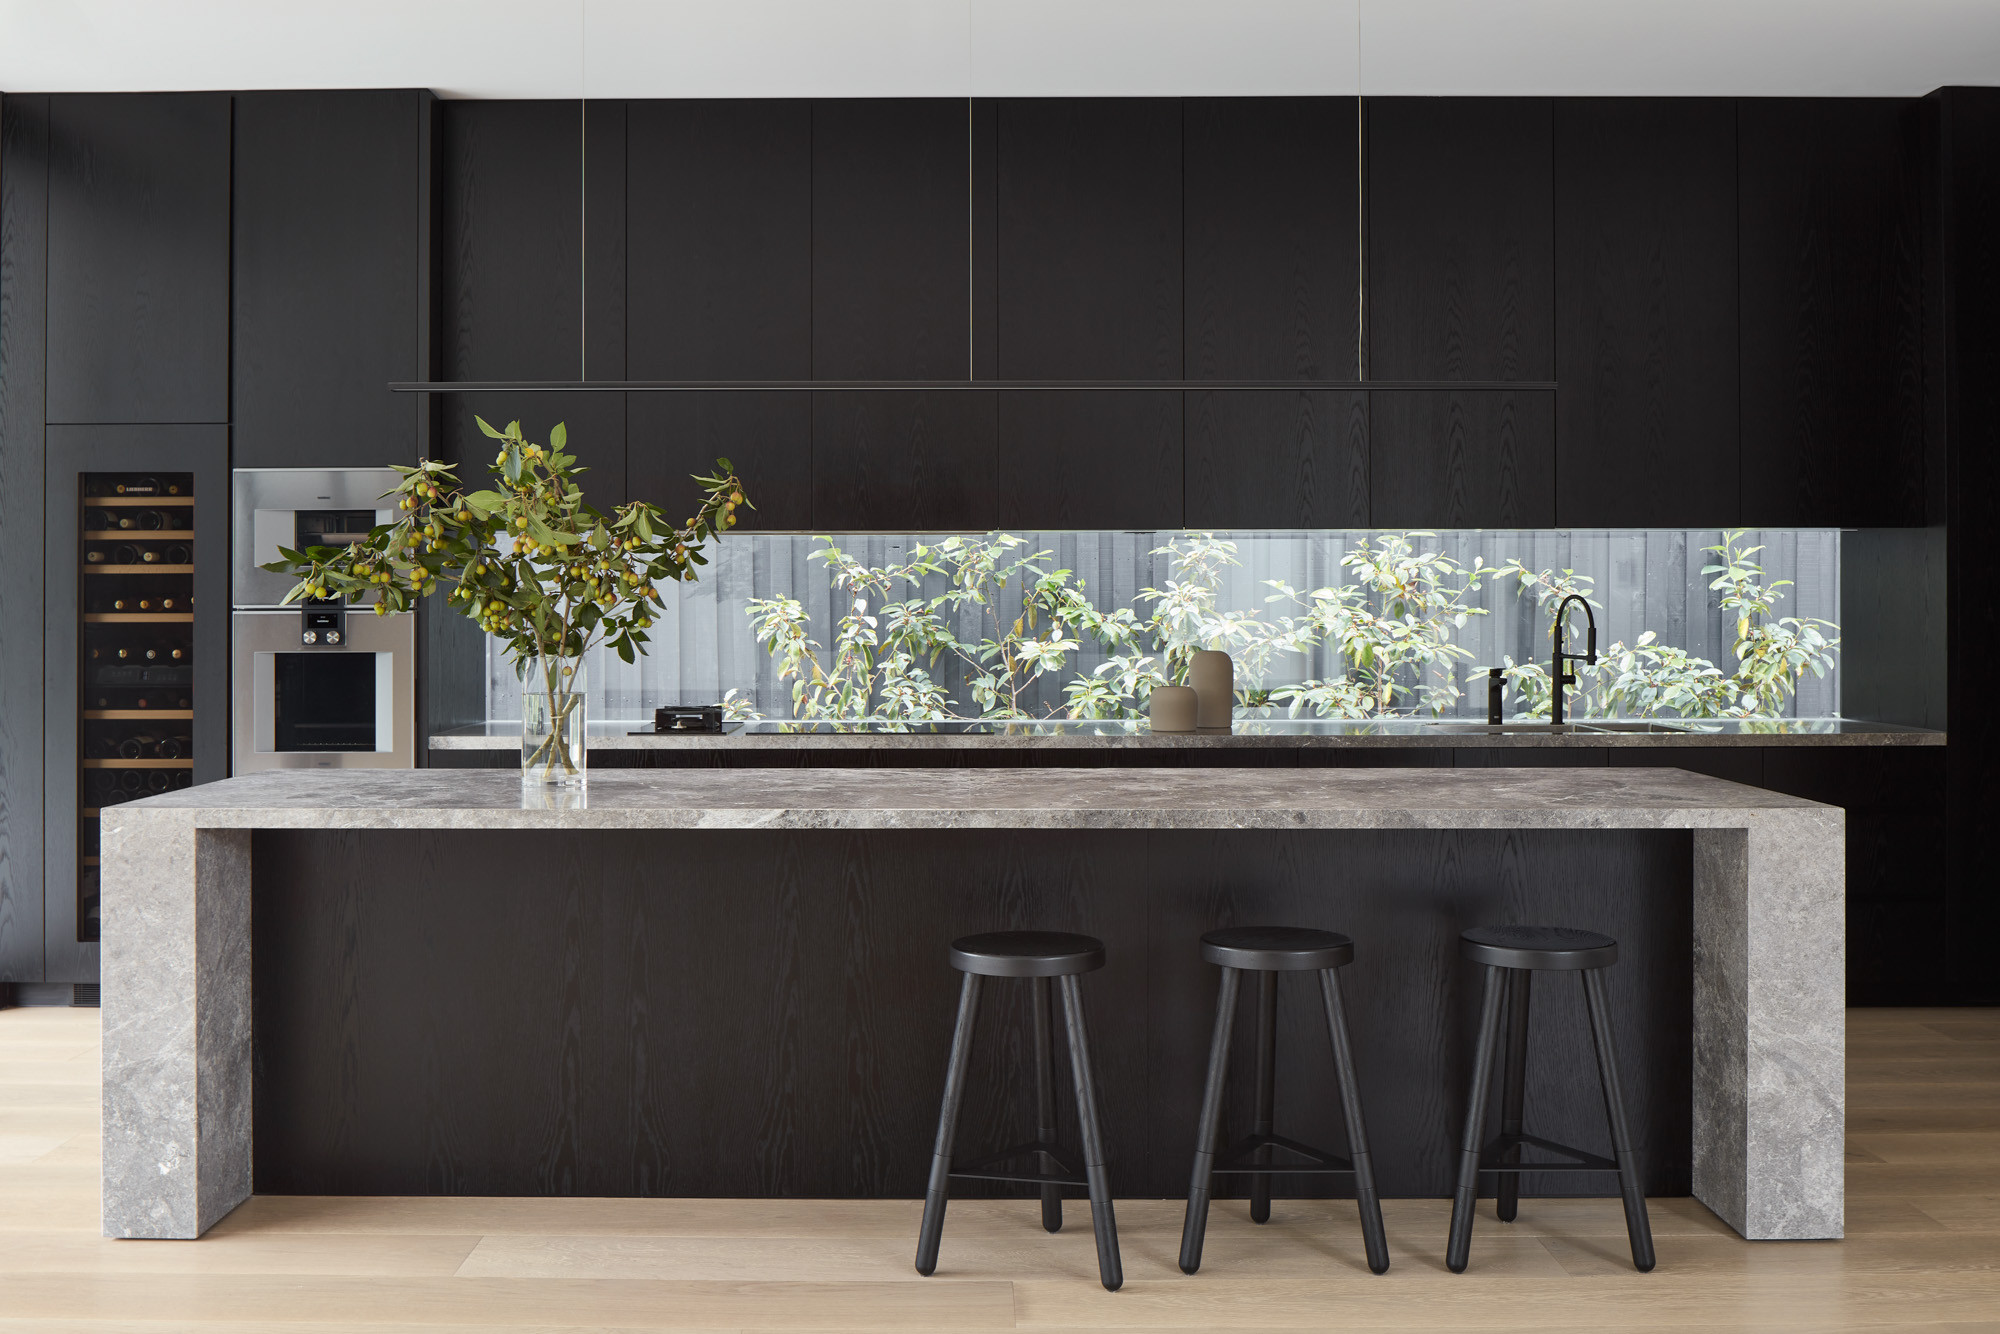 Kitchen Ideas Australia - Home Interior Design